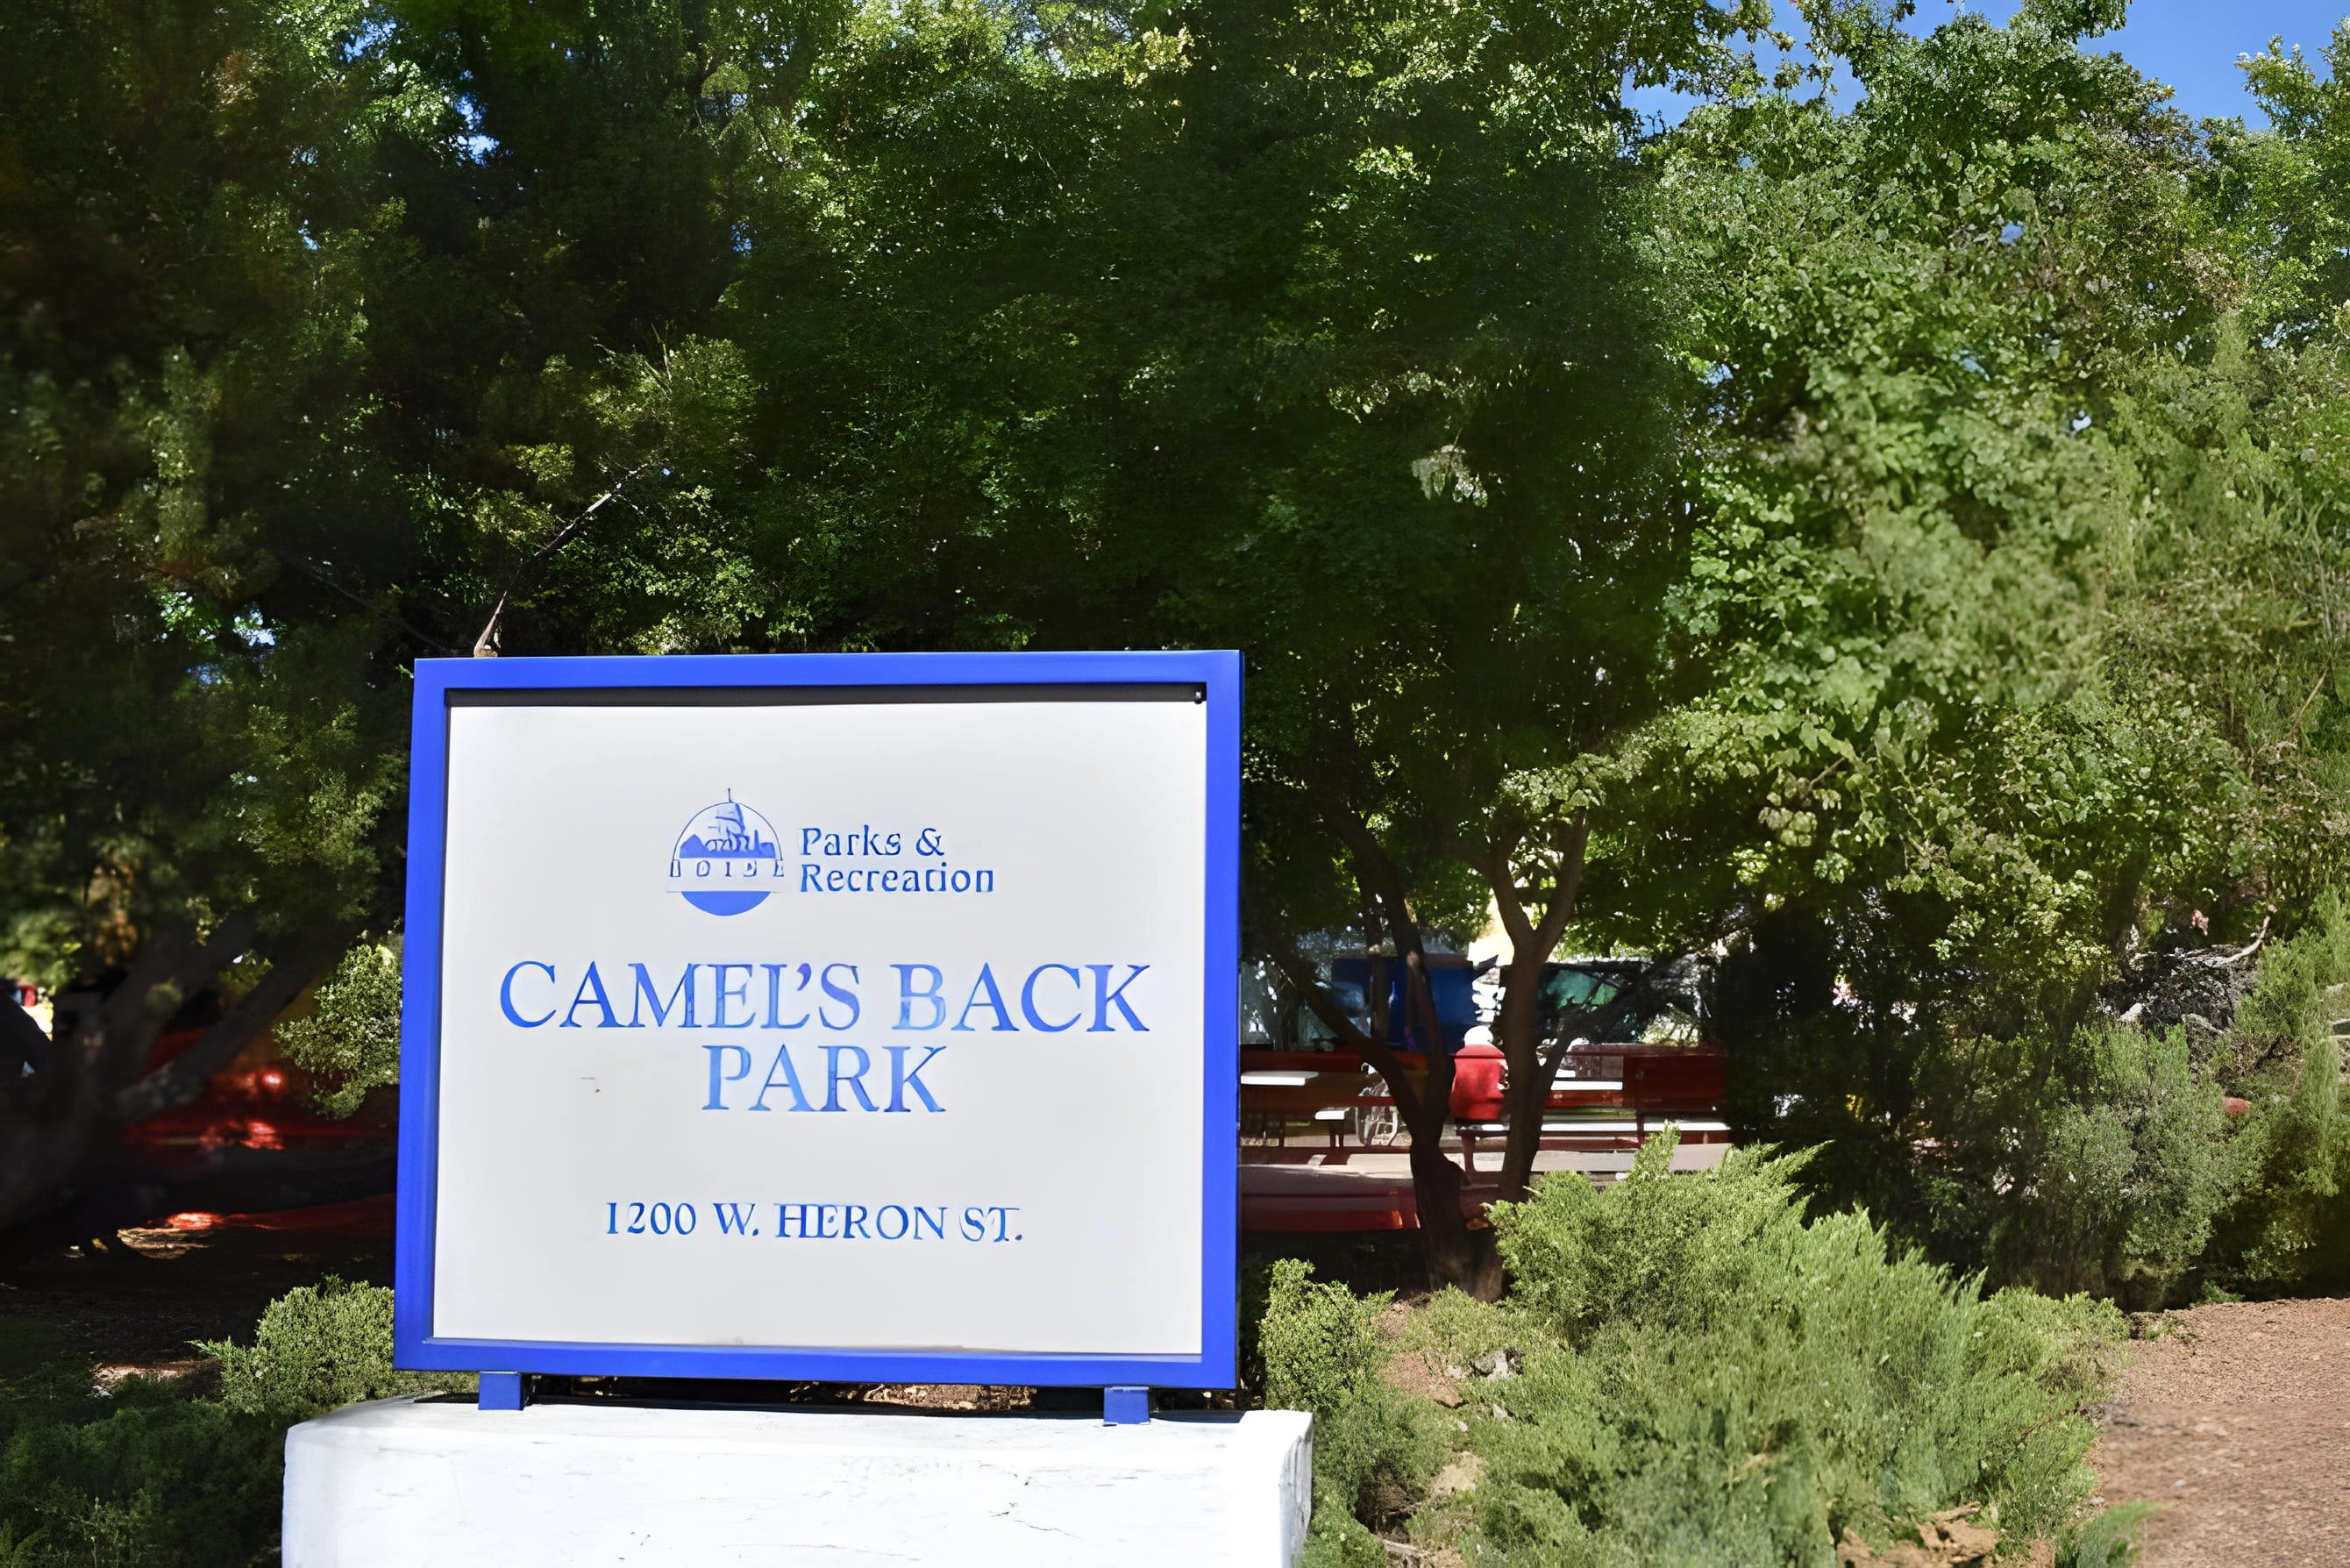 Camel's Back Park